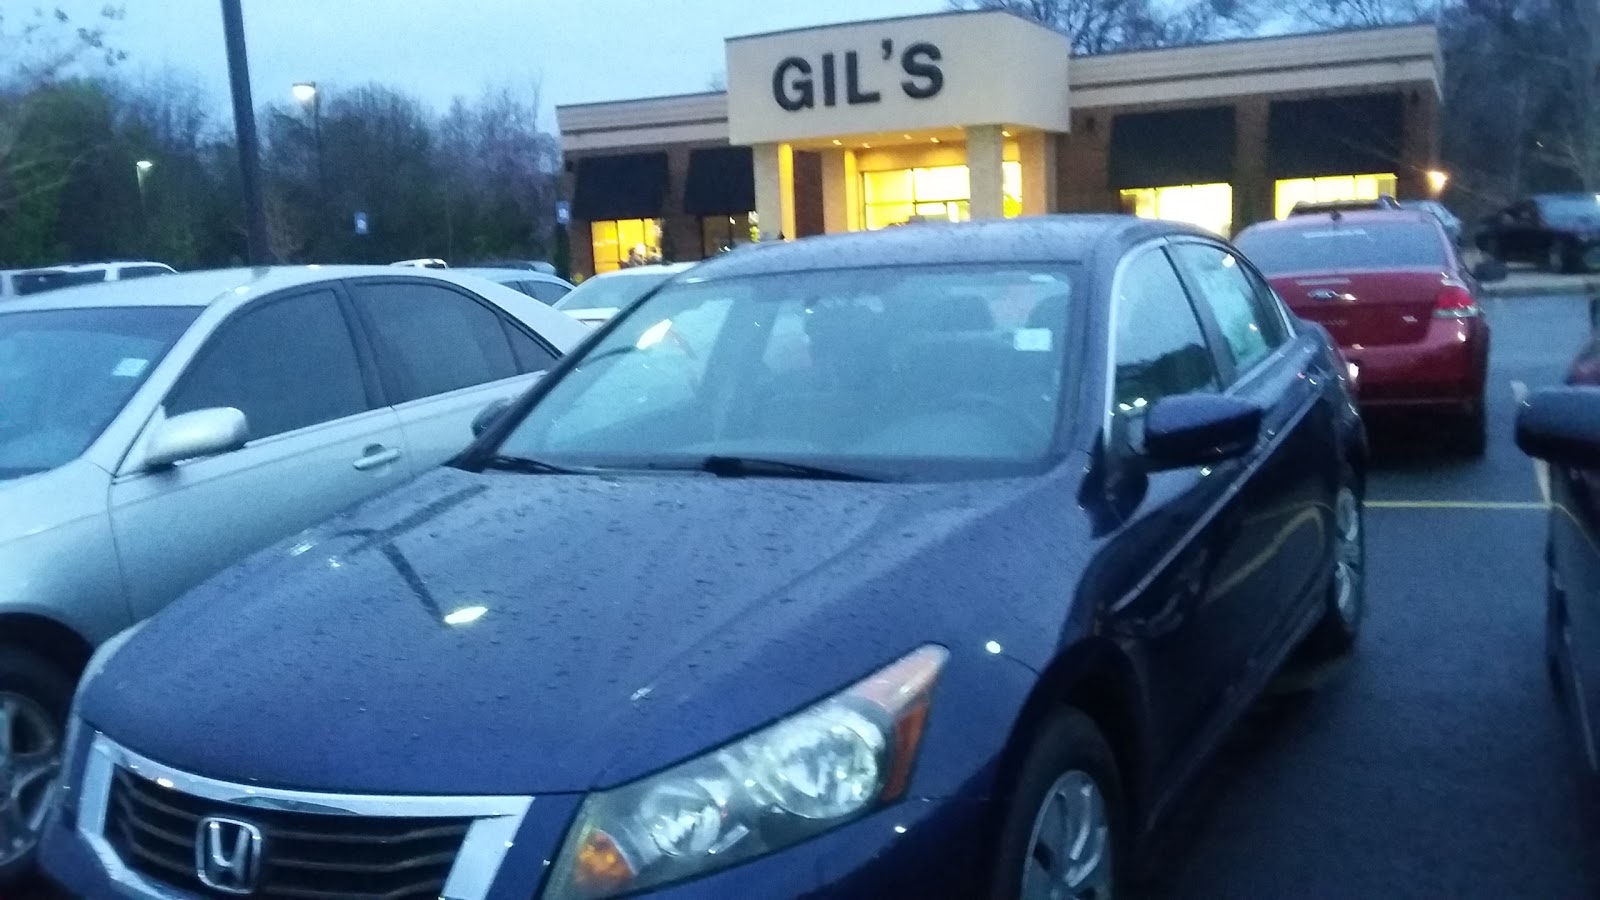 Gil'S Auto Sales